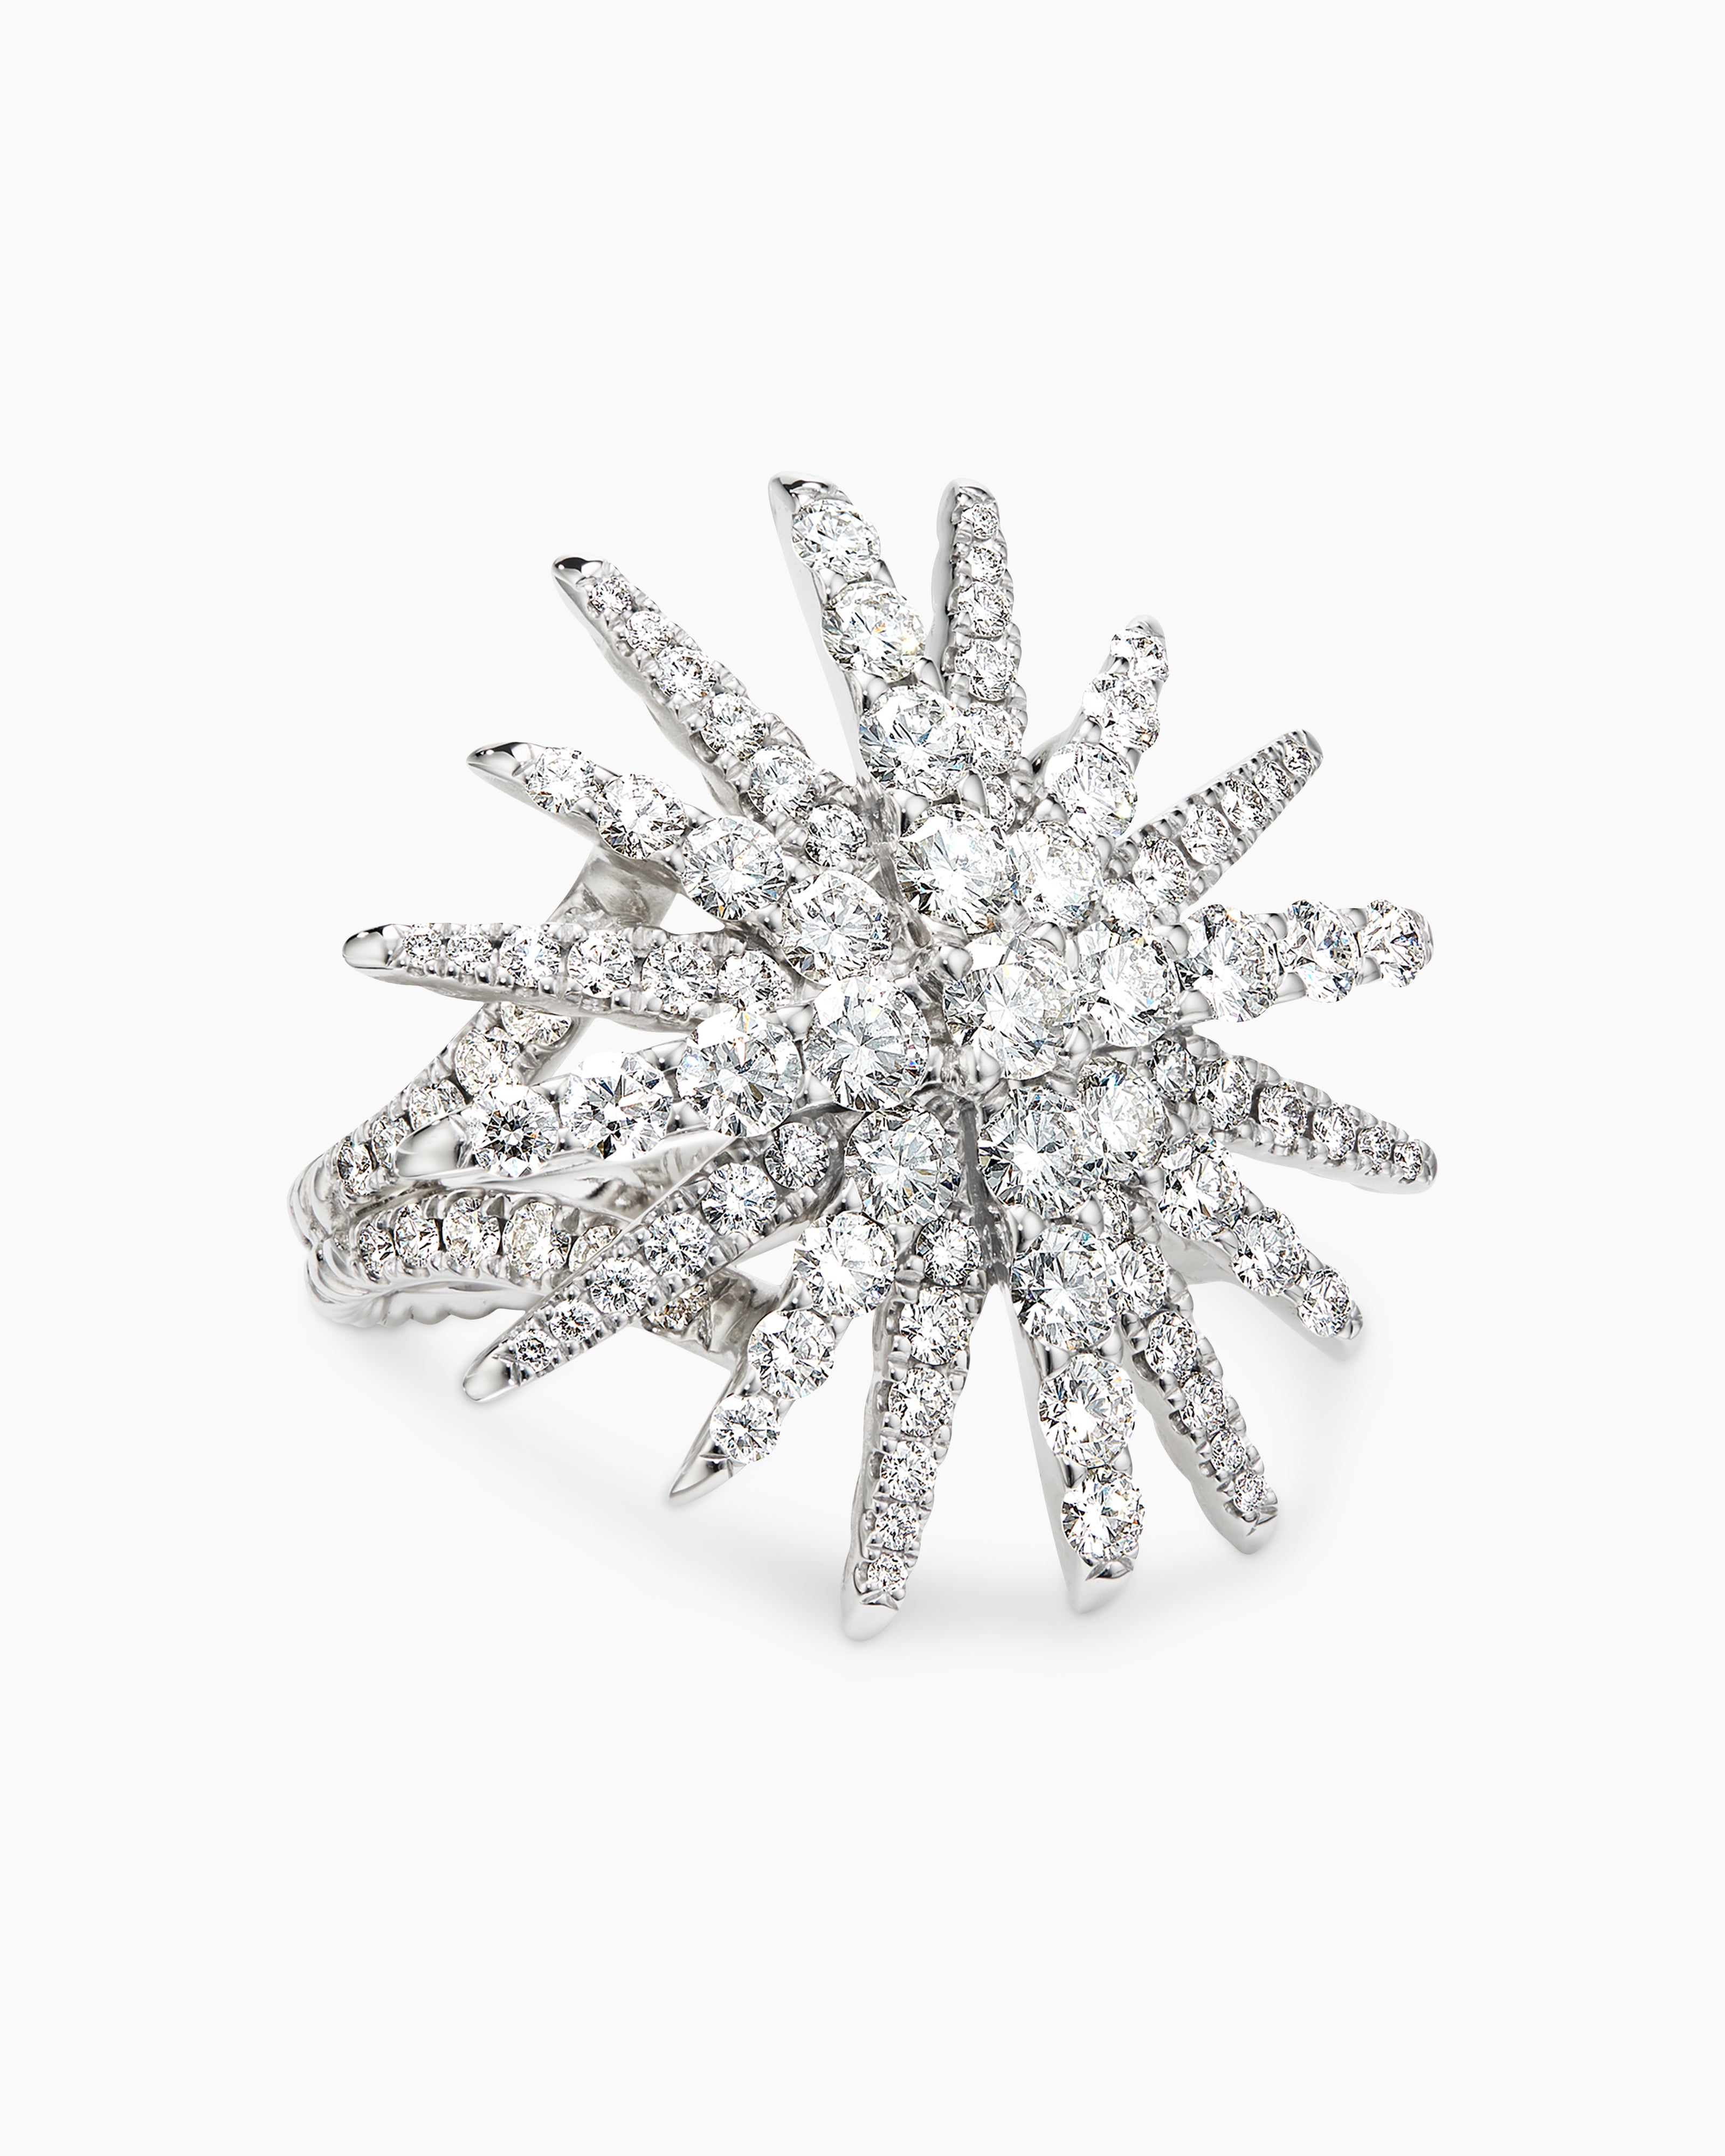 Starburst Ring in 18K White Gold with Diamonds, 28mm | David Yurman